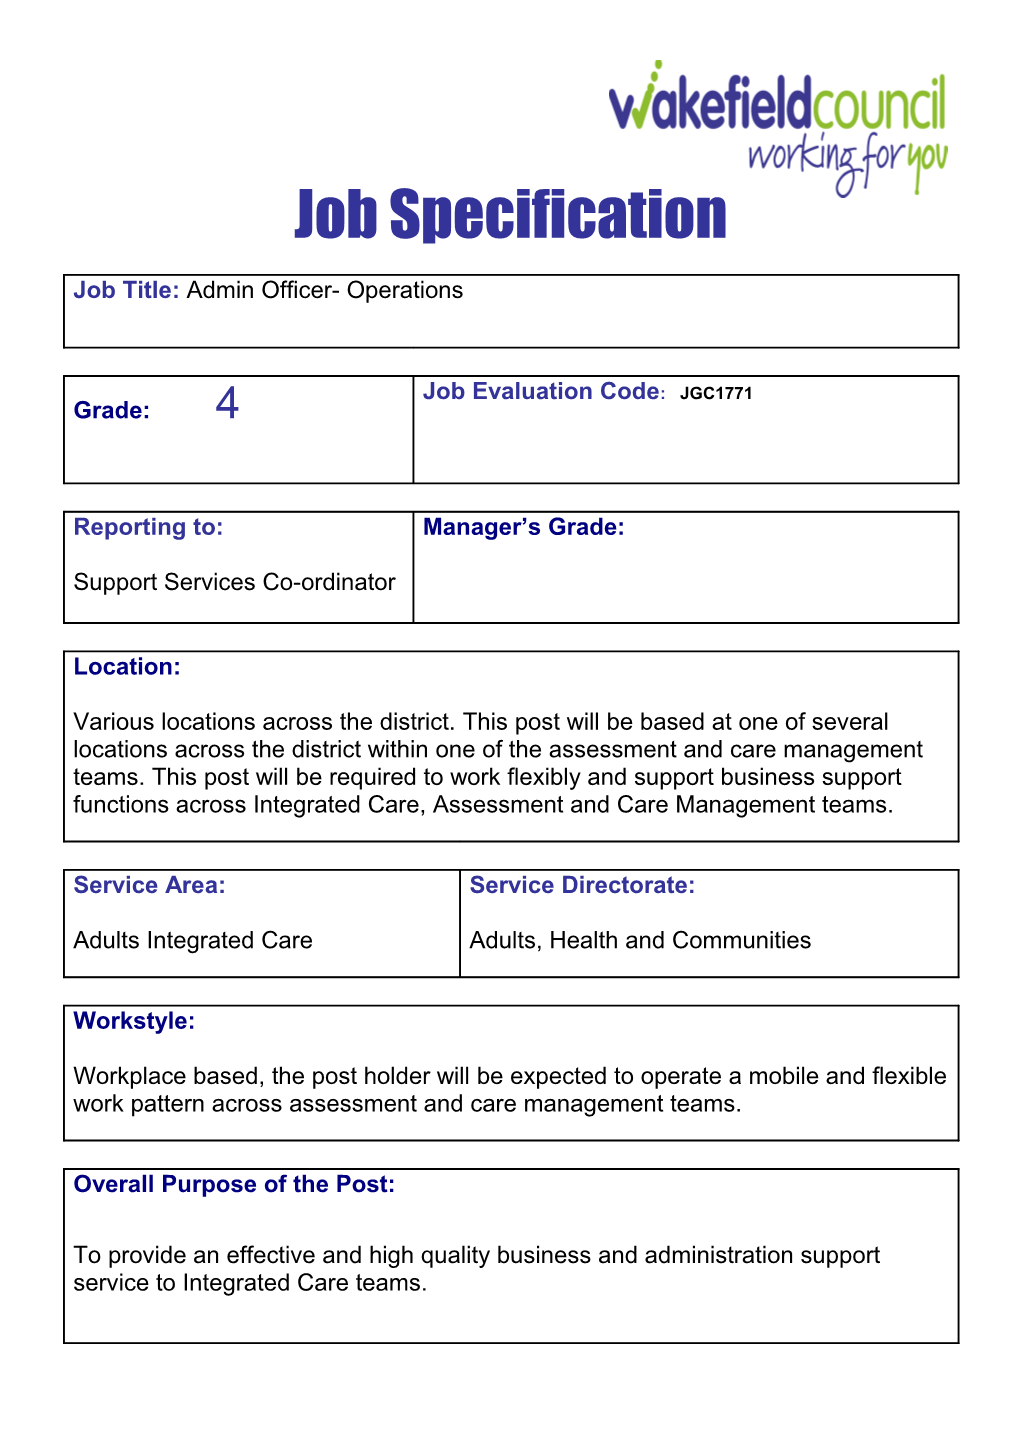 Job Specification Form